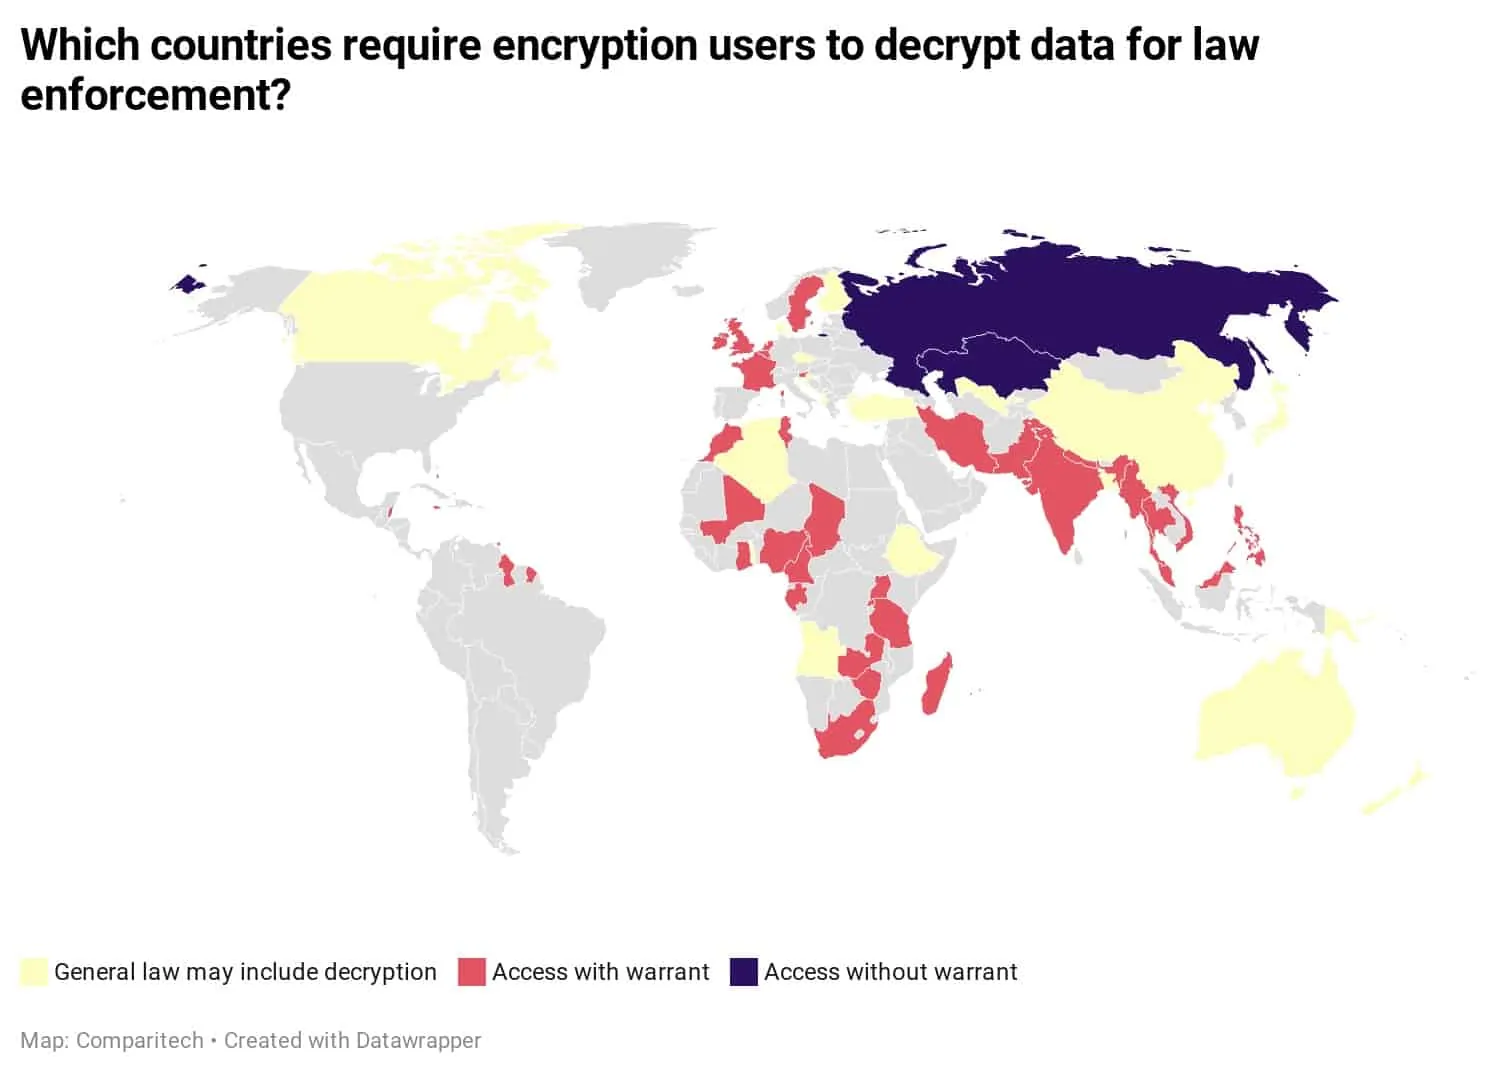 Encryption users